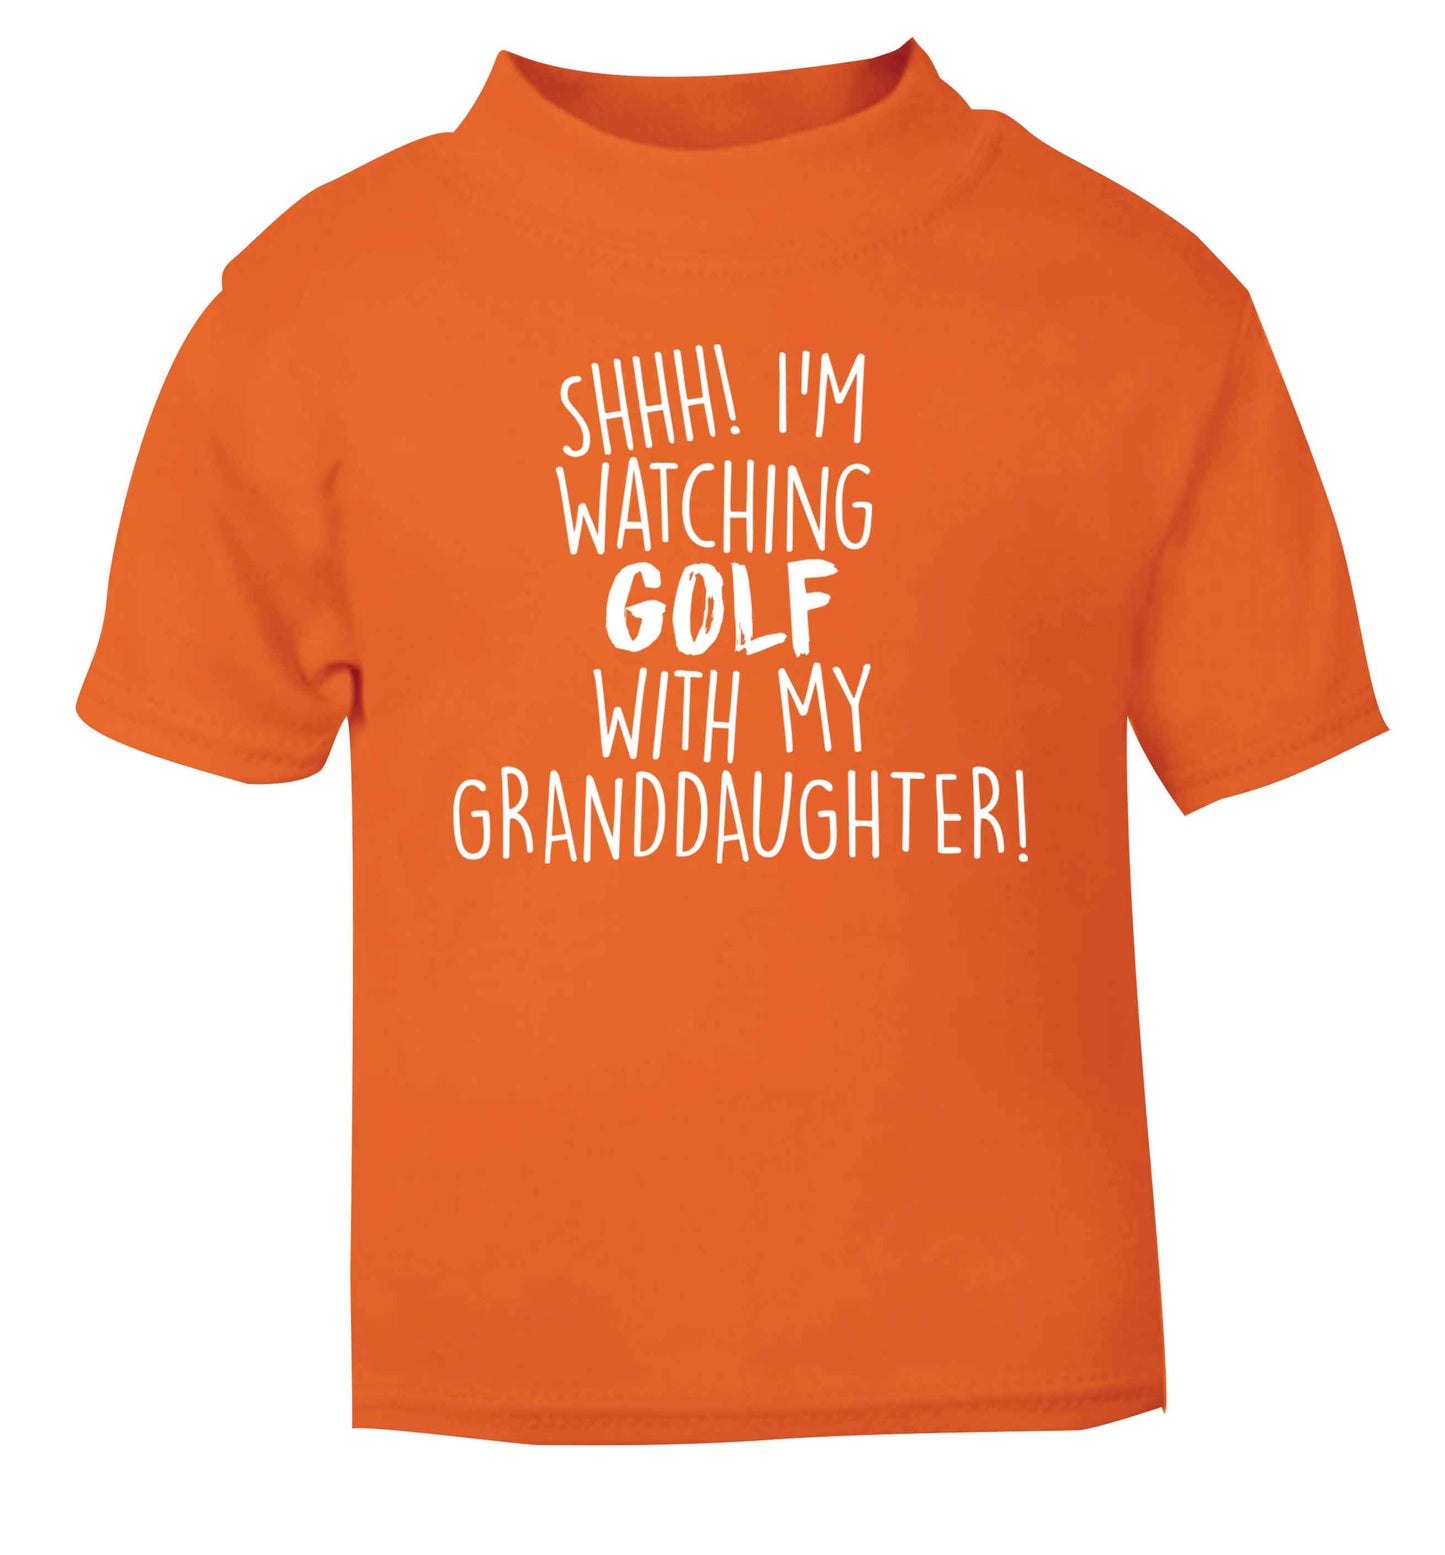 Shh I'm watching golf with my granddaughter orange Baby Toddler Tshirt 2 Years